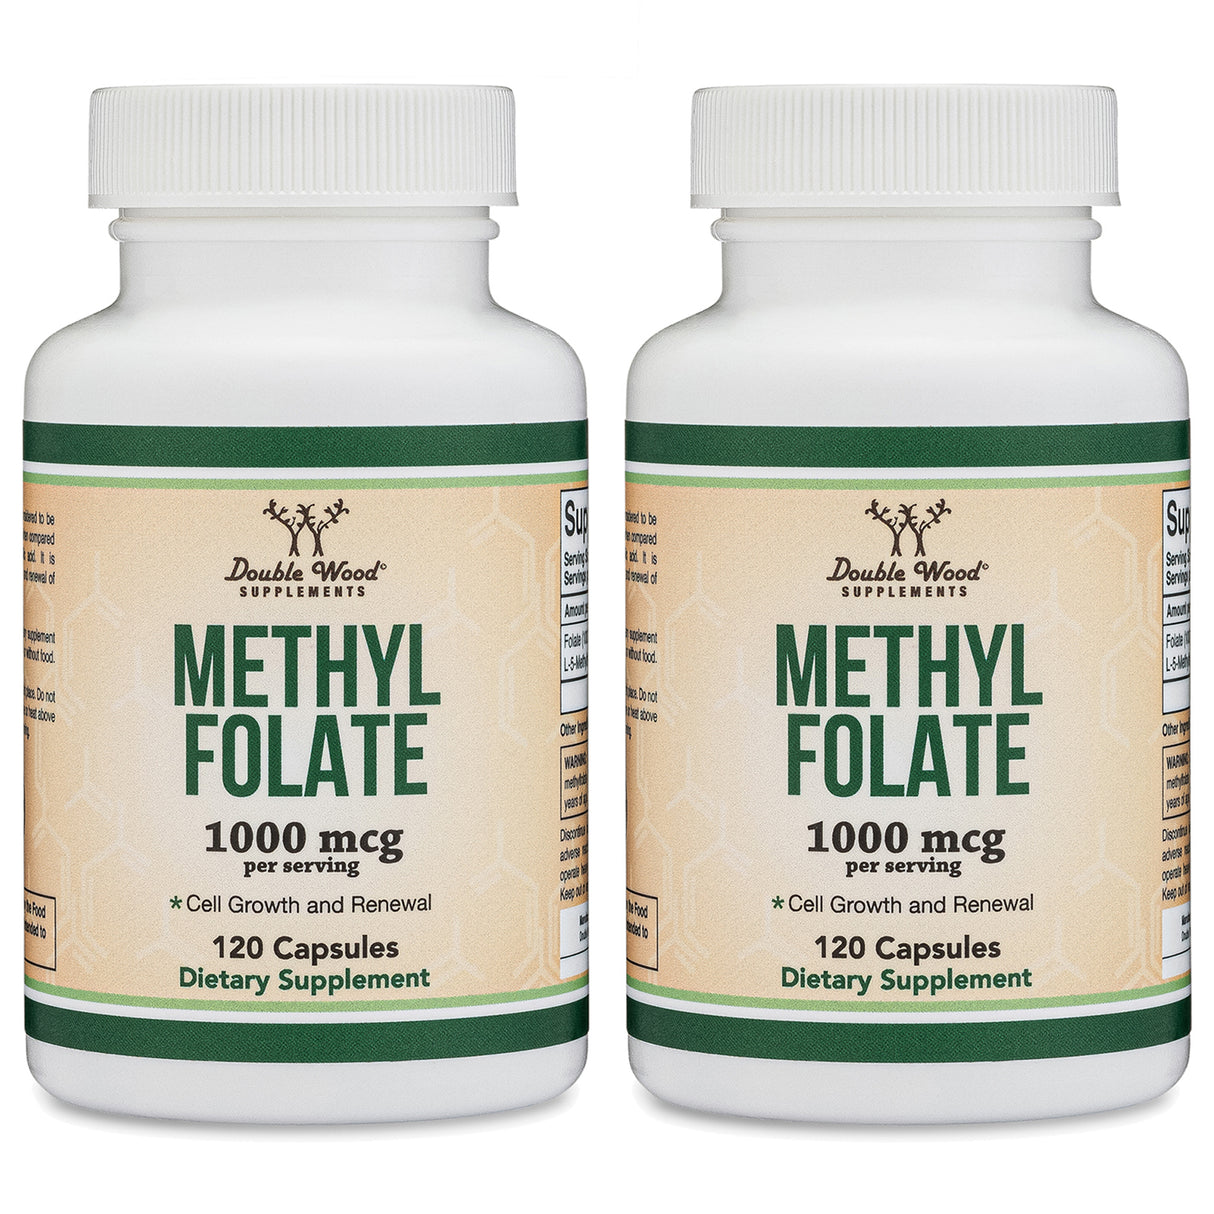 Methylfolate